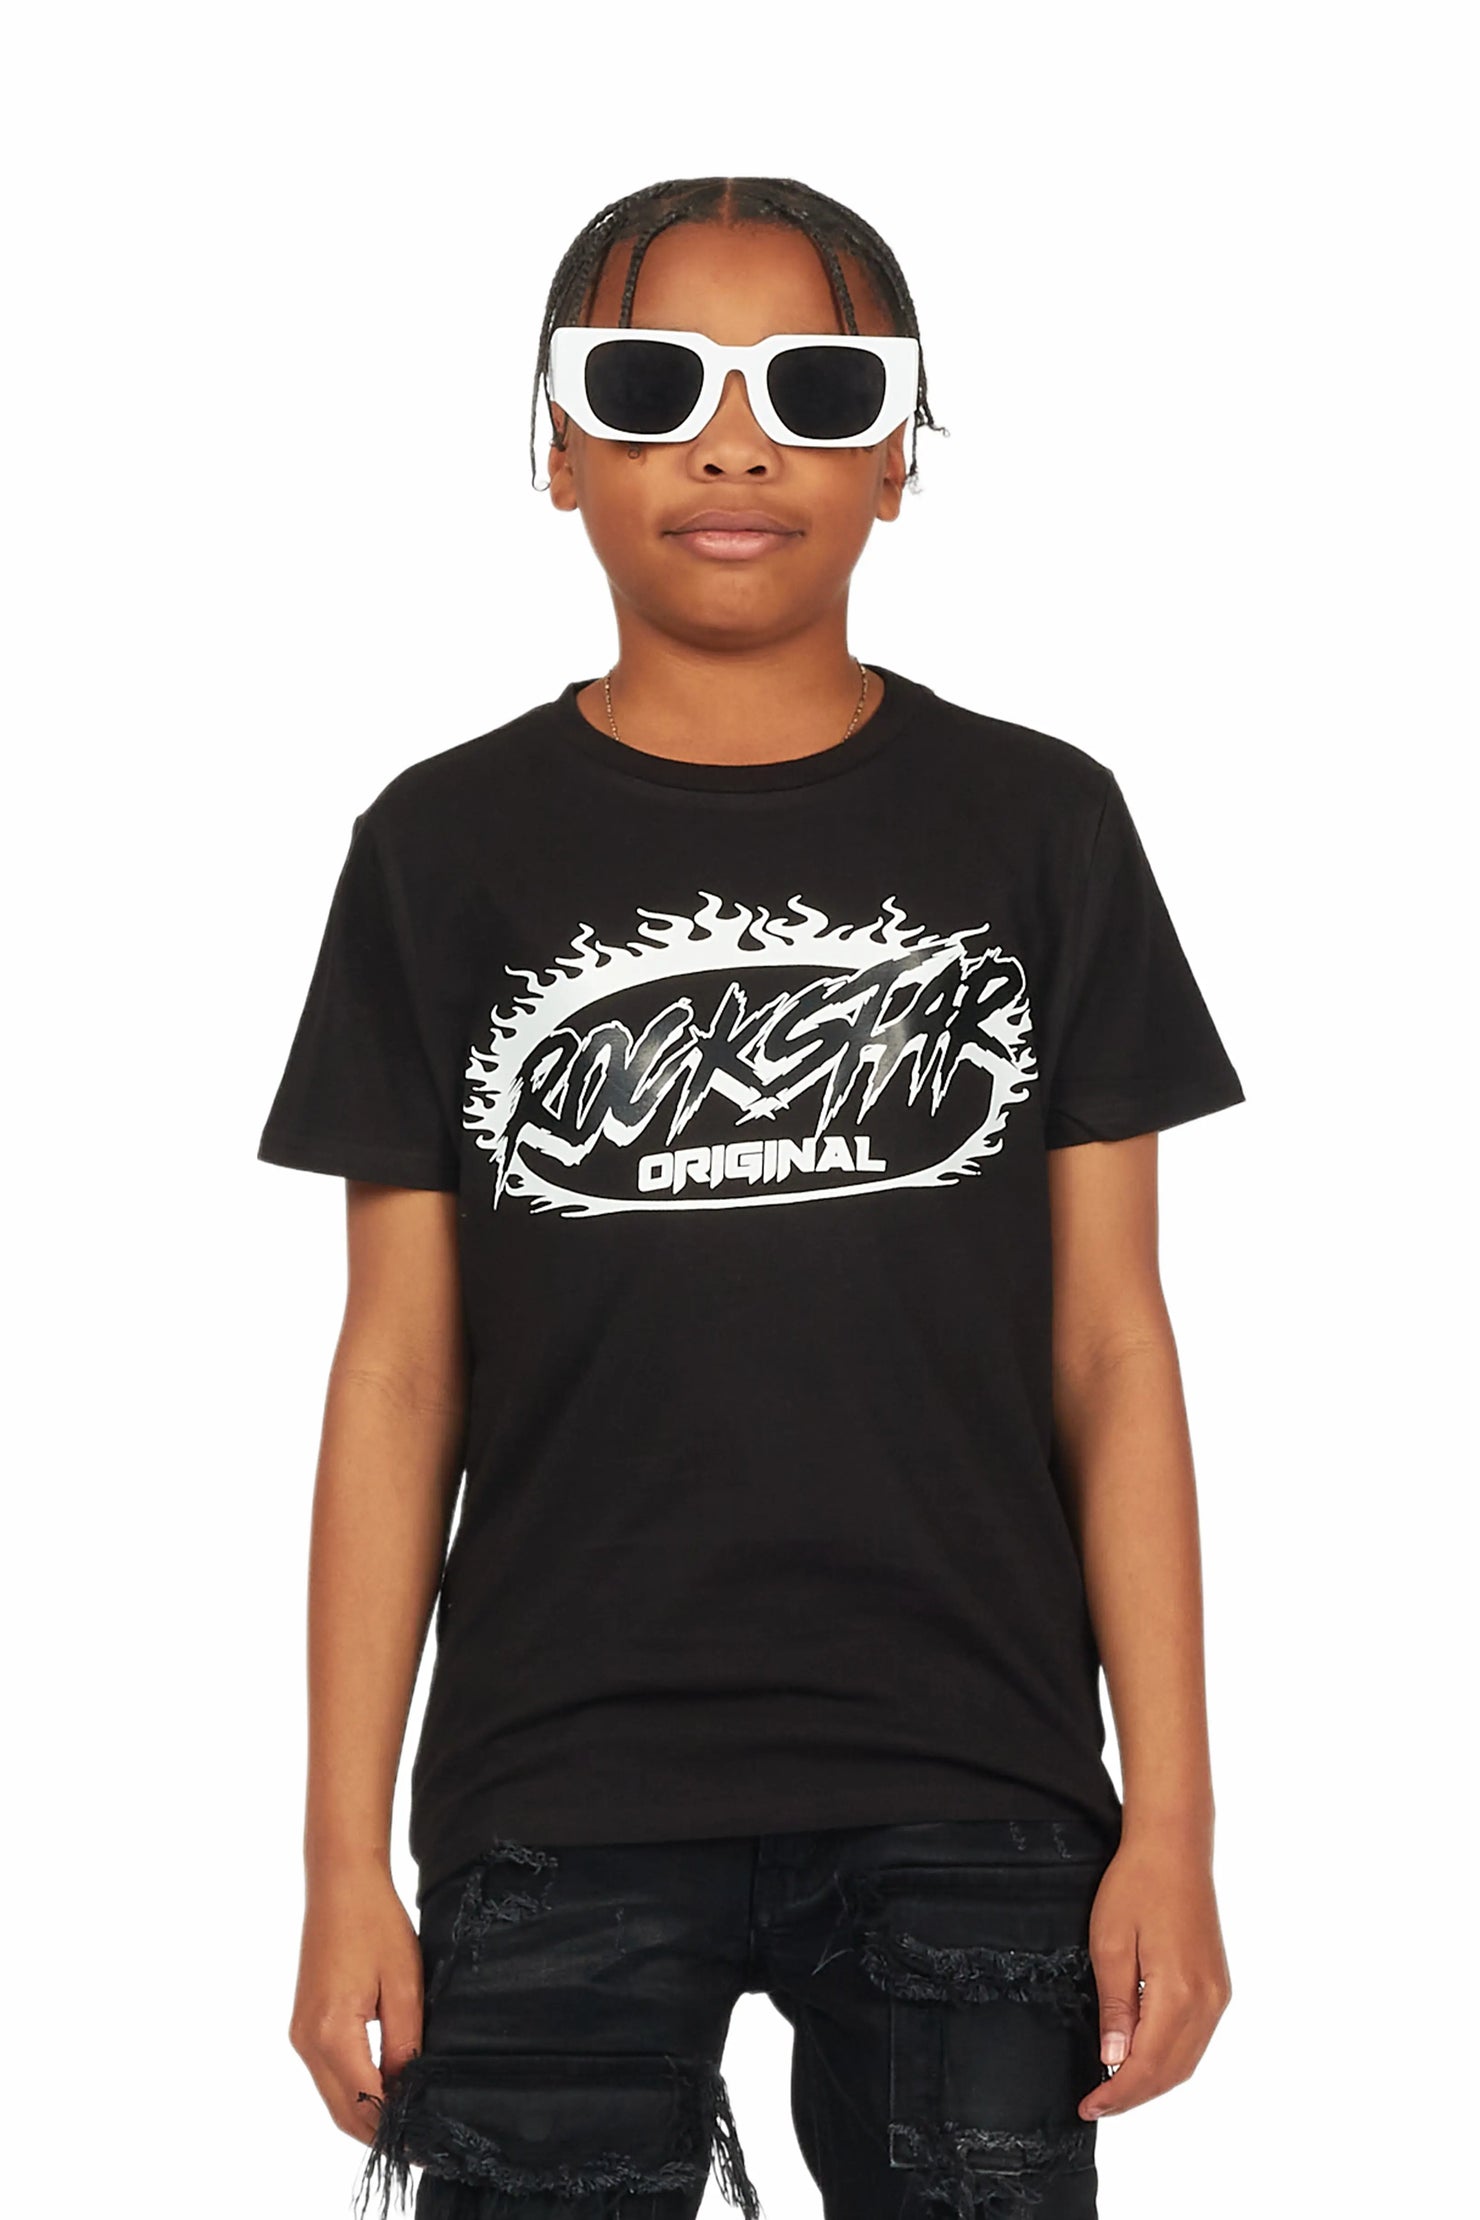 Boys Bakari Black Graphic T-Shirt